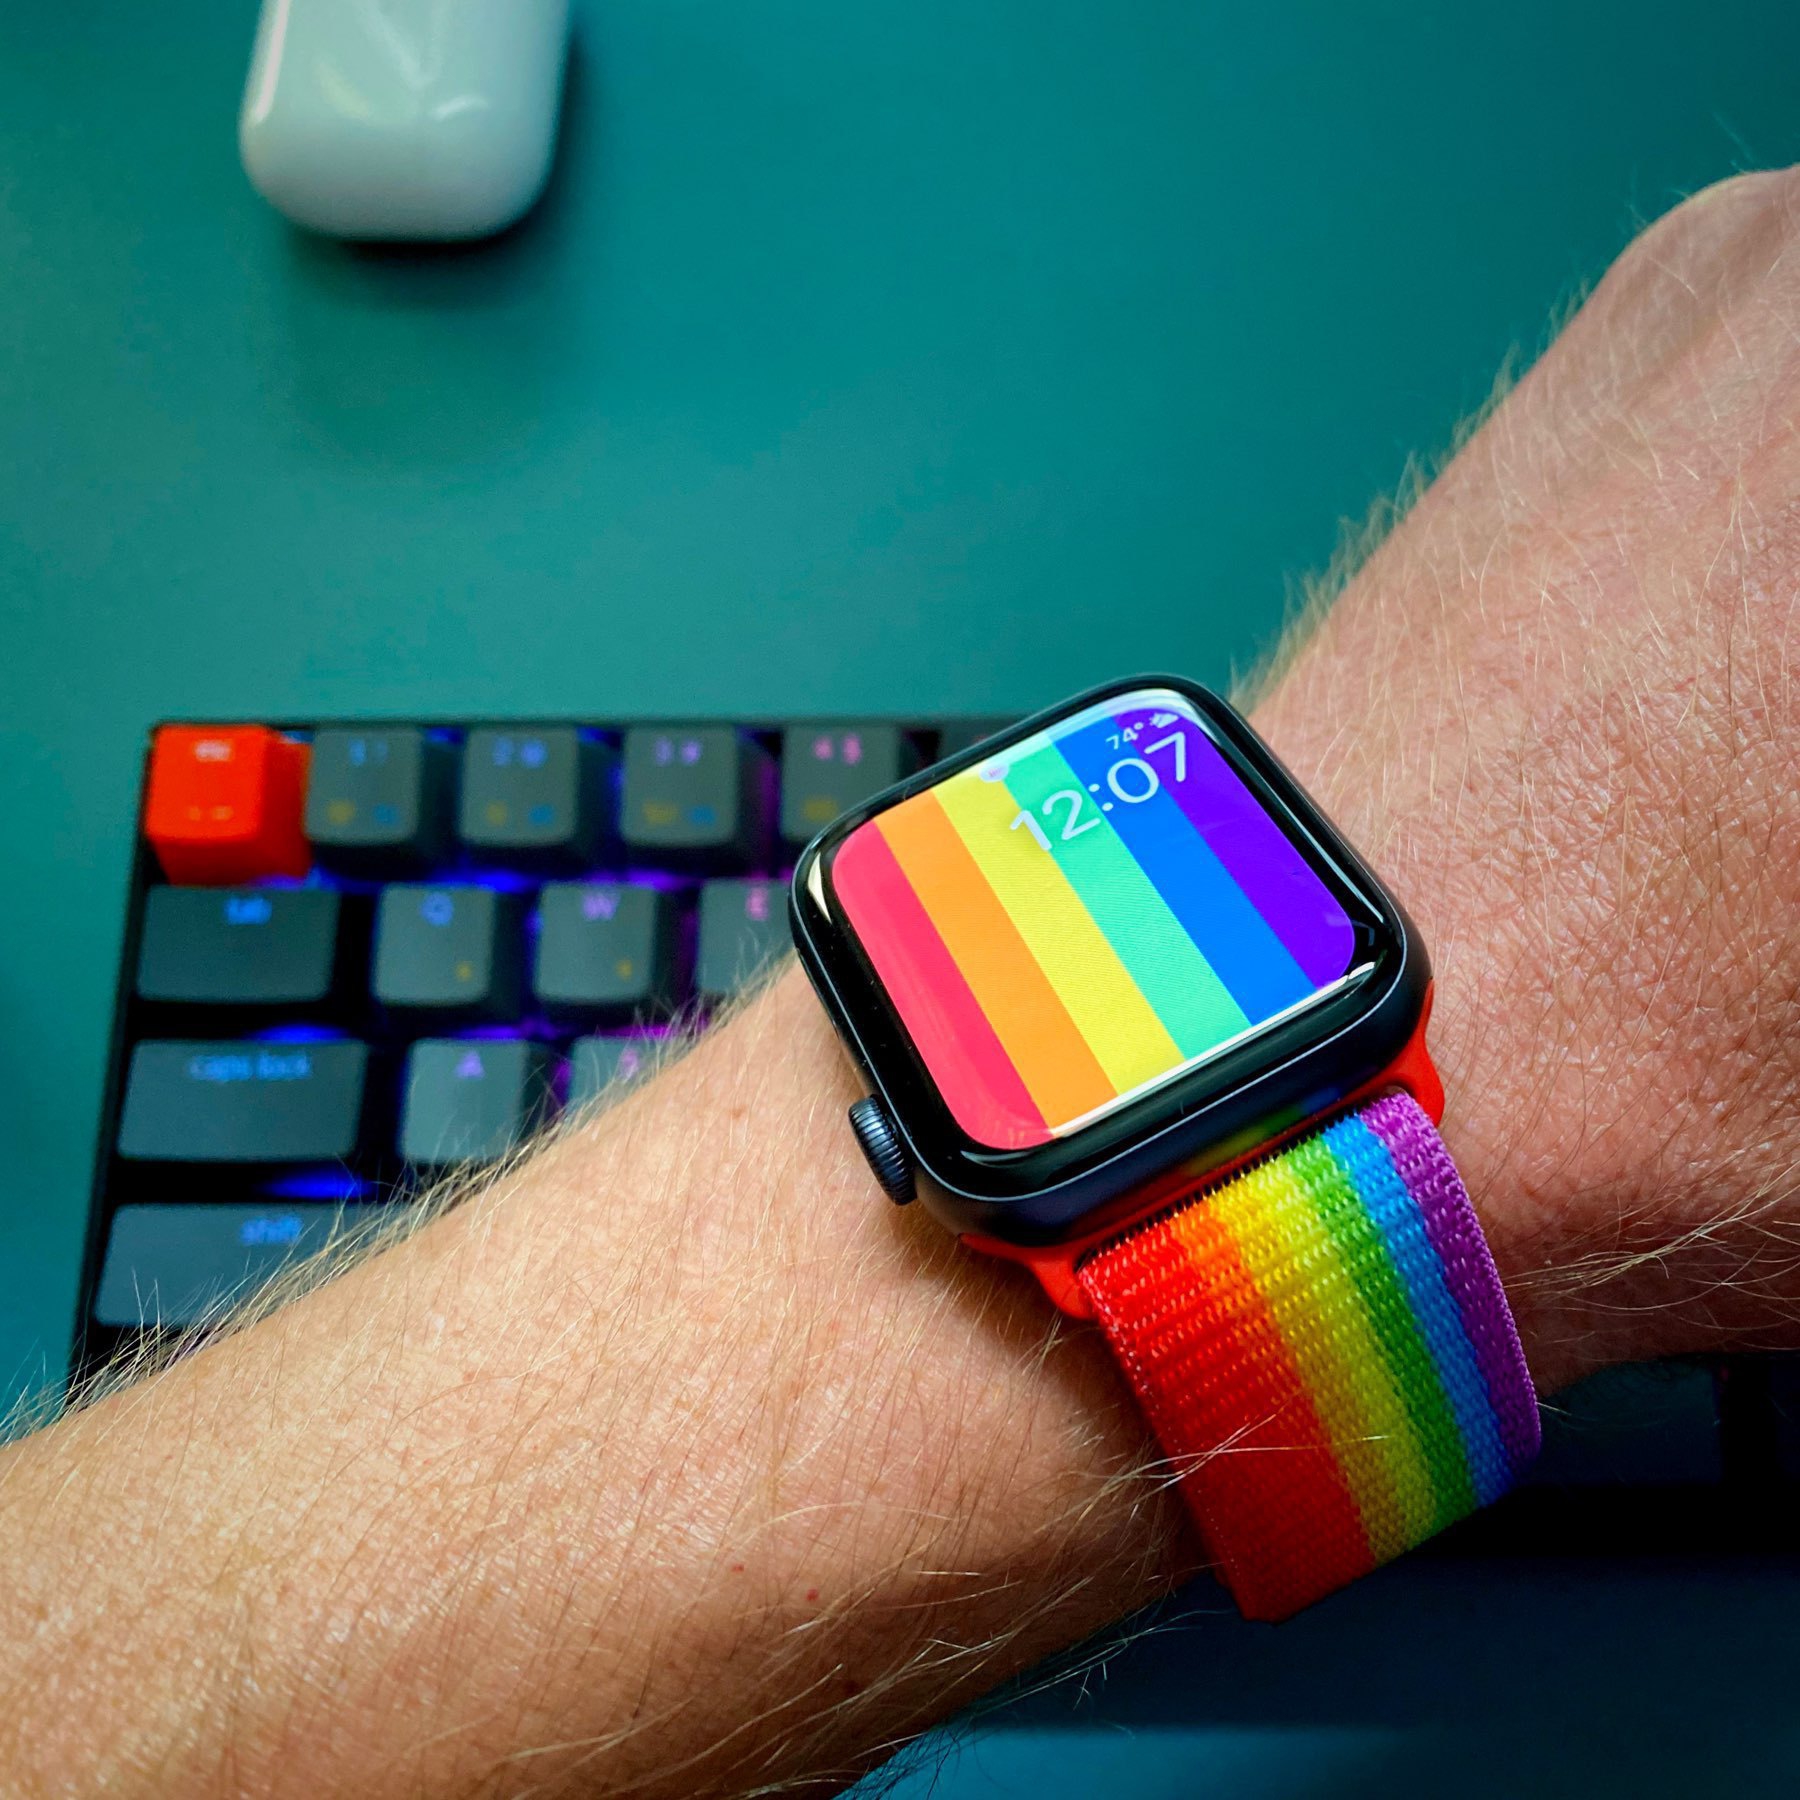 Wrist wearing a rainbow Apple Watch band